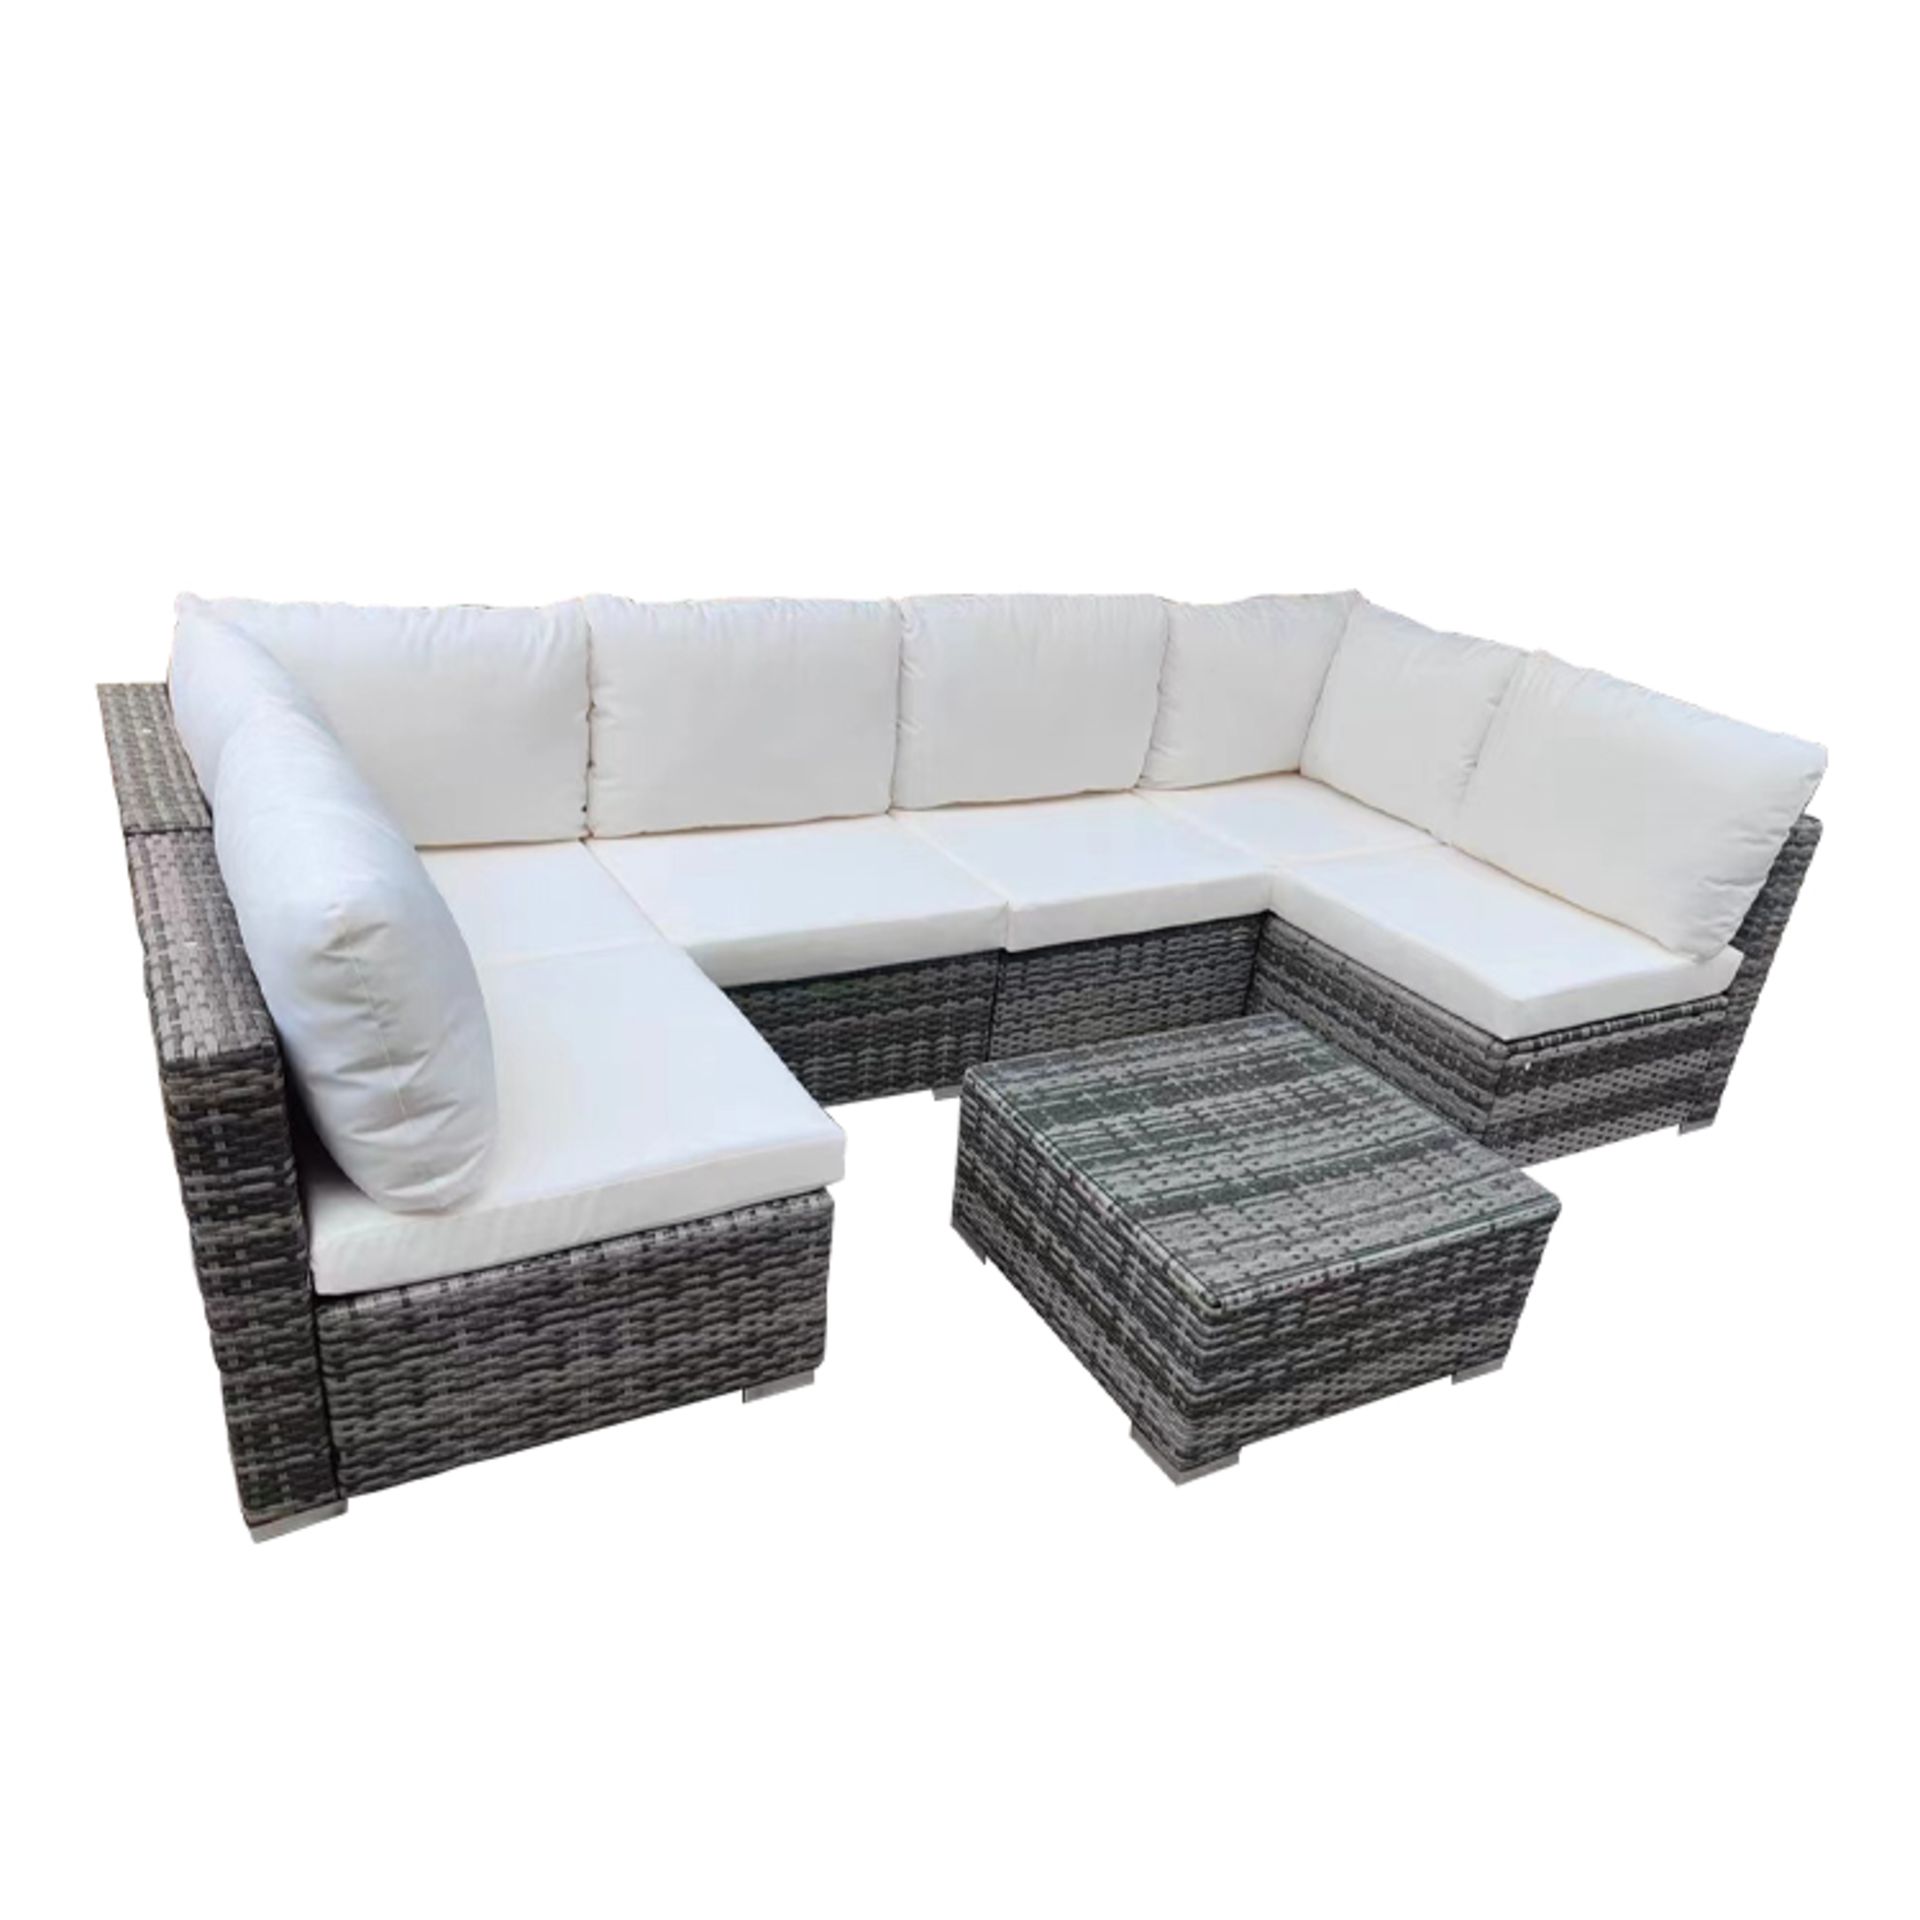 + VAT Brand New Chelsea Garden Company U Shaped Light Grey Rattan Garden Sofa Set With Tempered